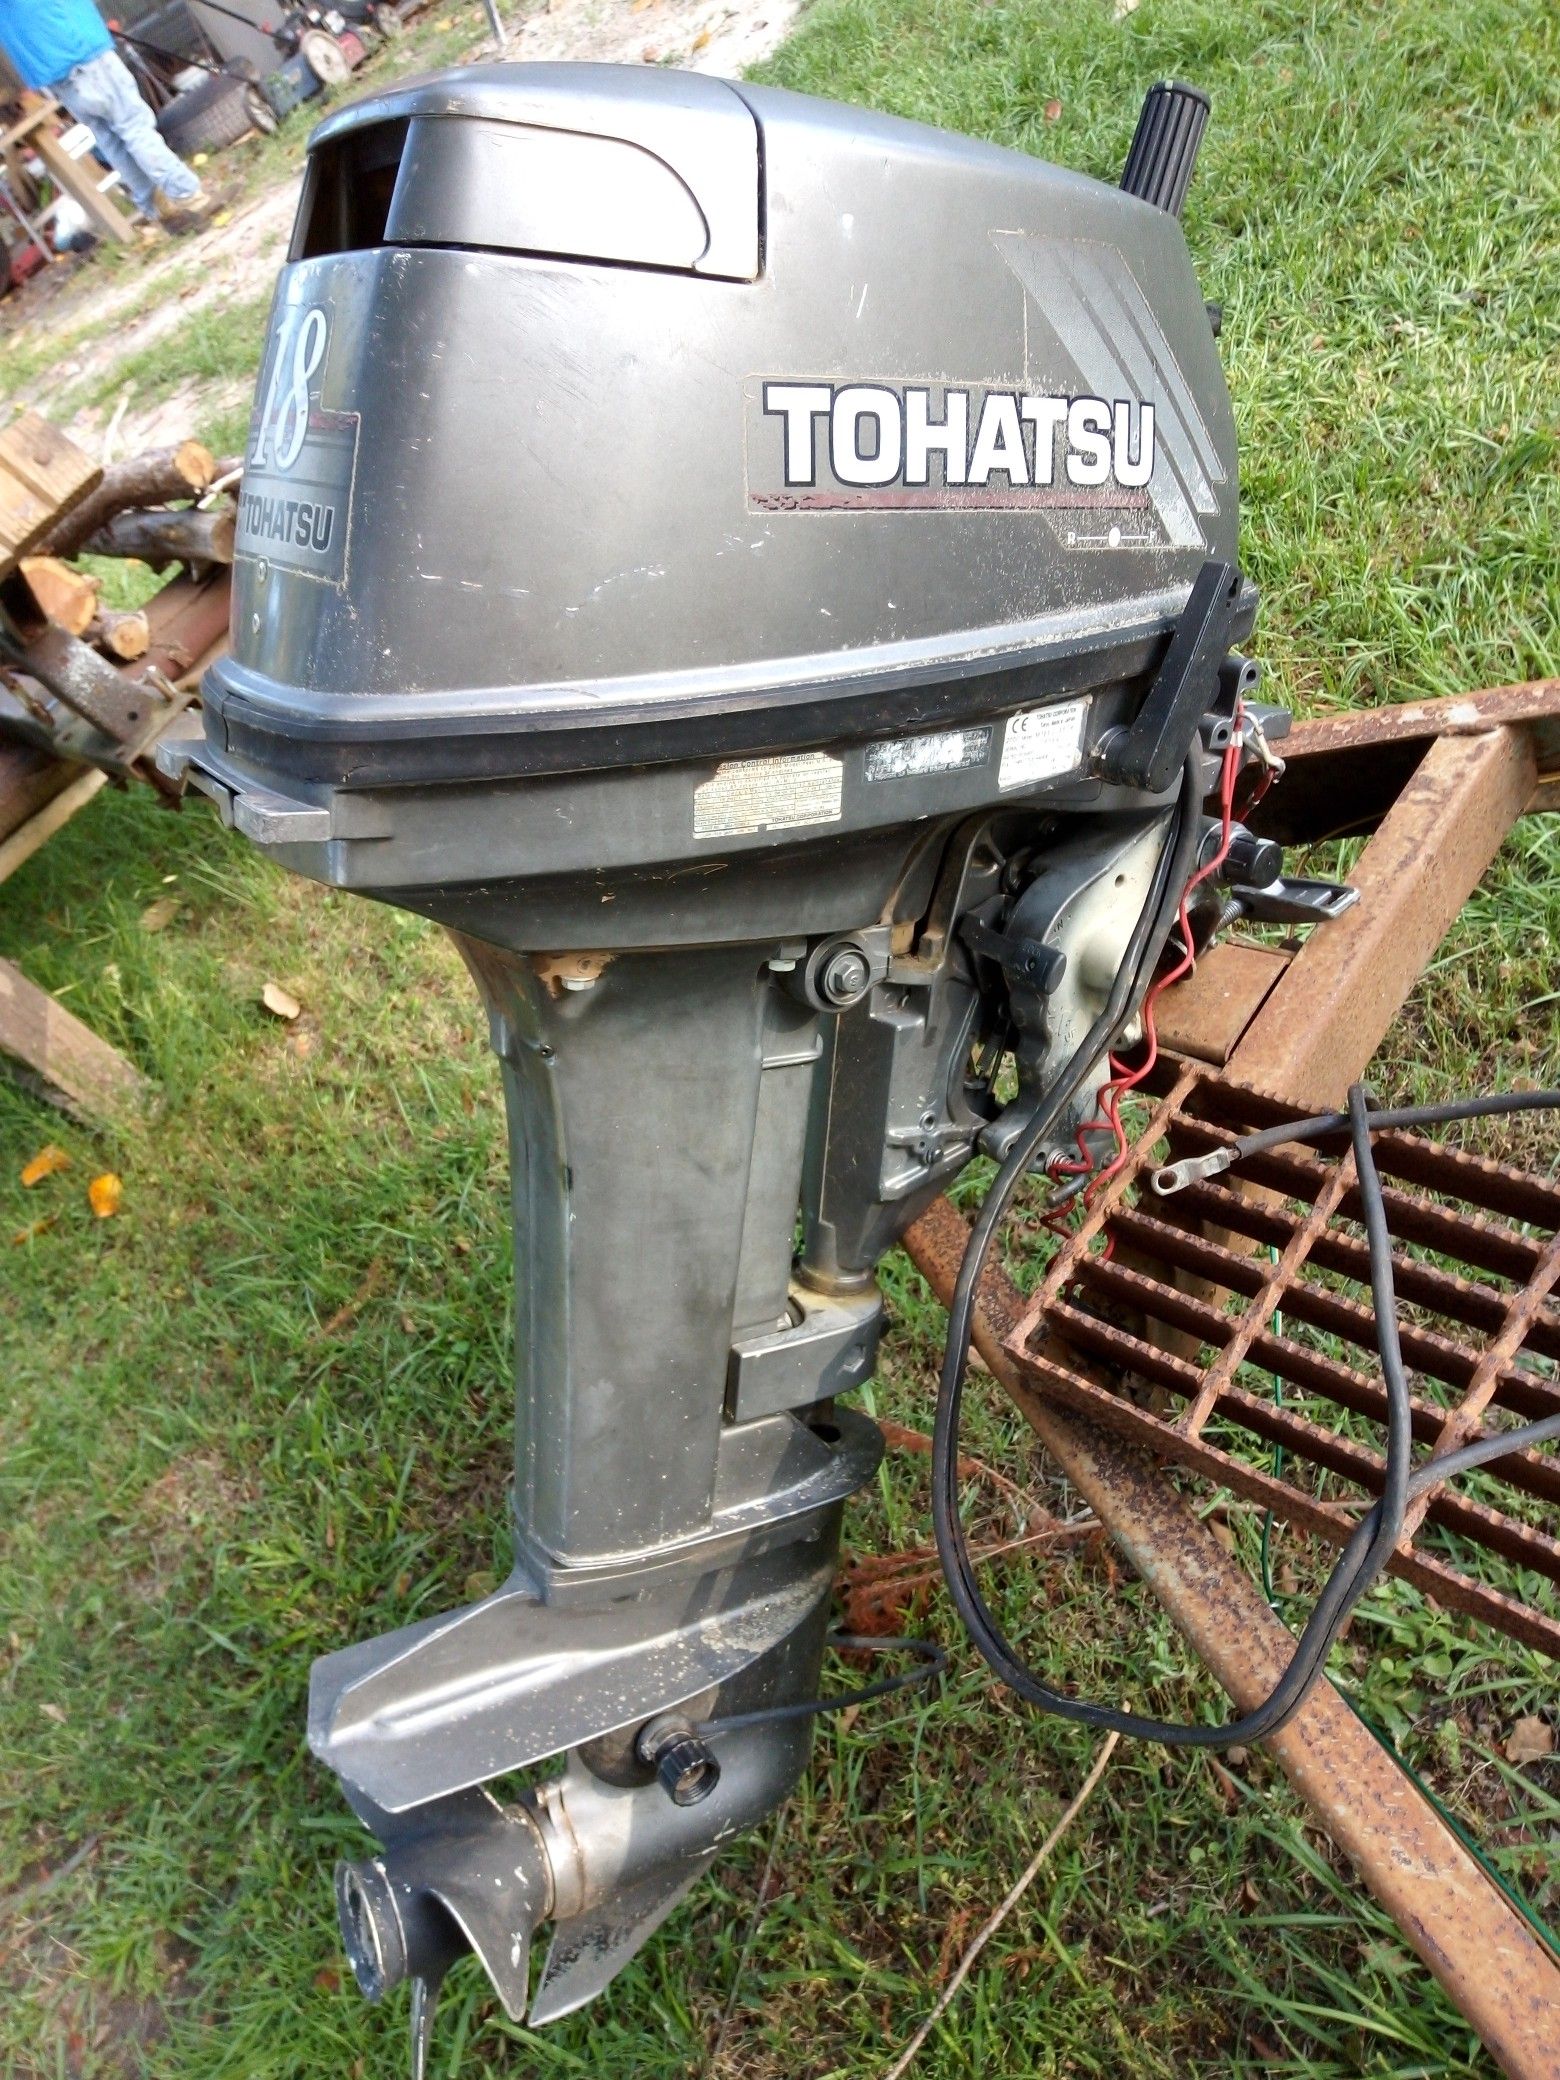 Tohatsu boat motor